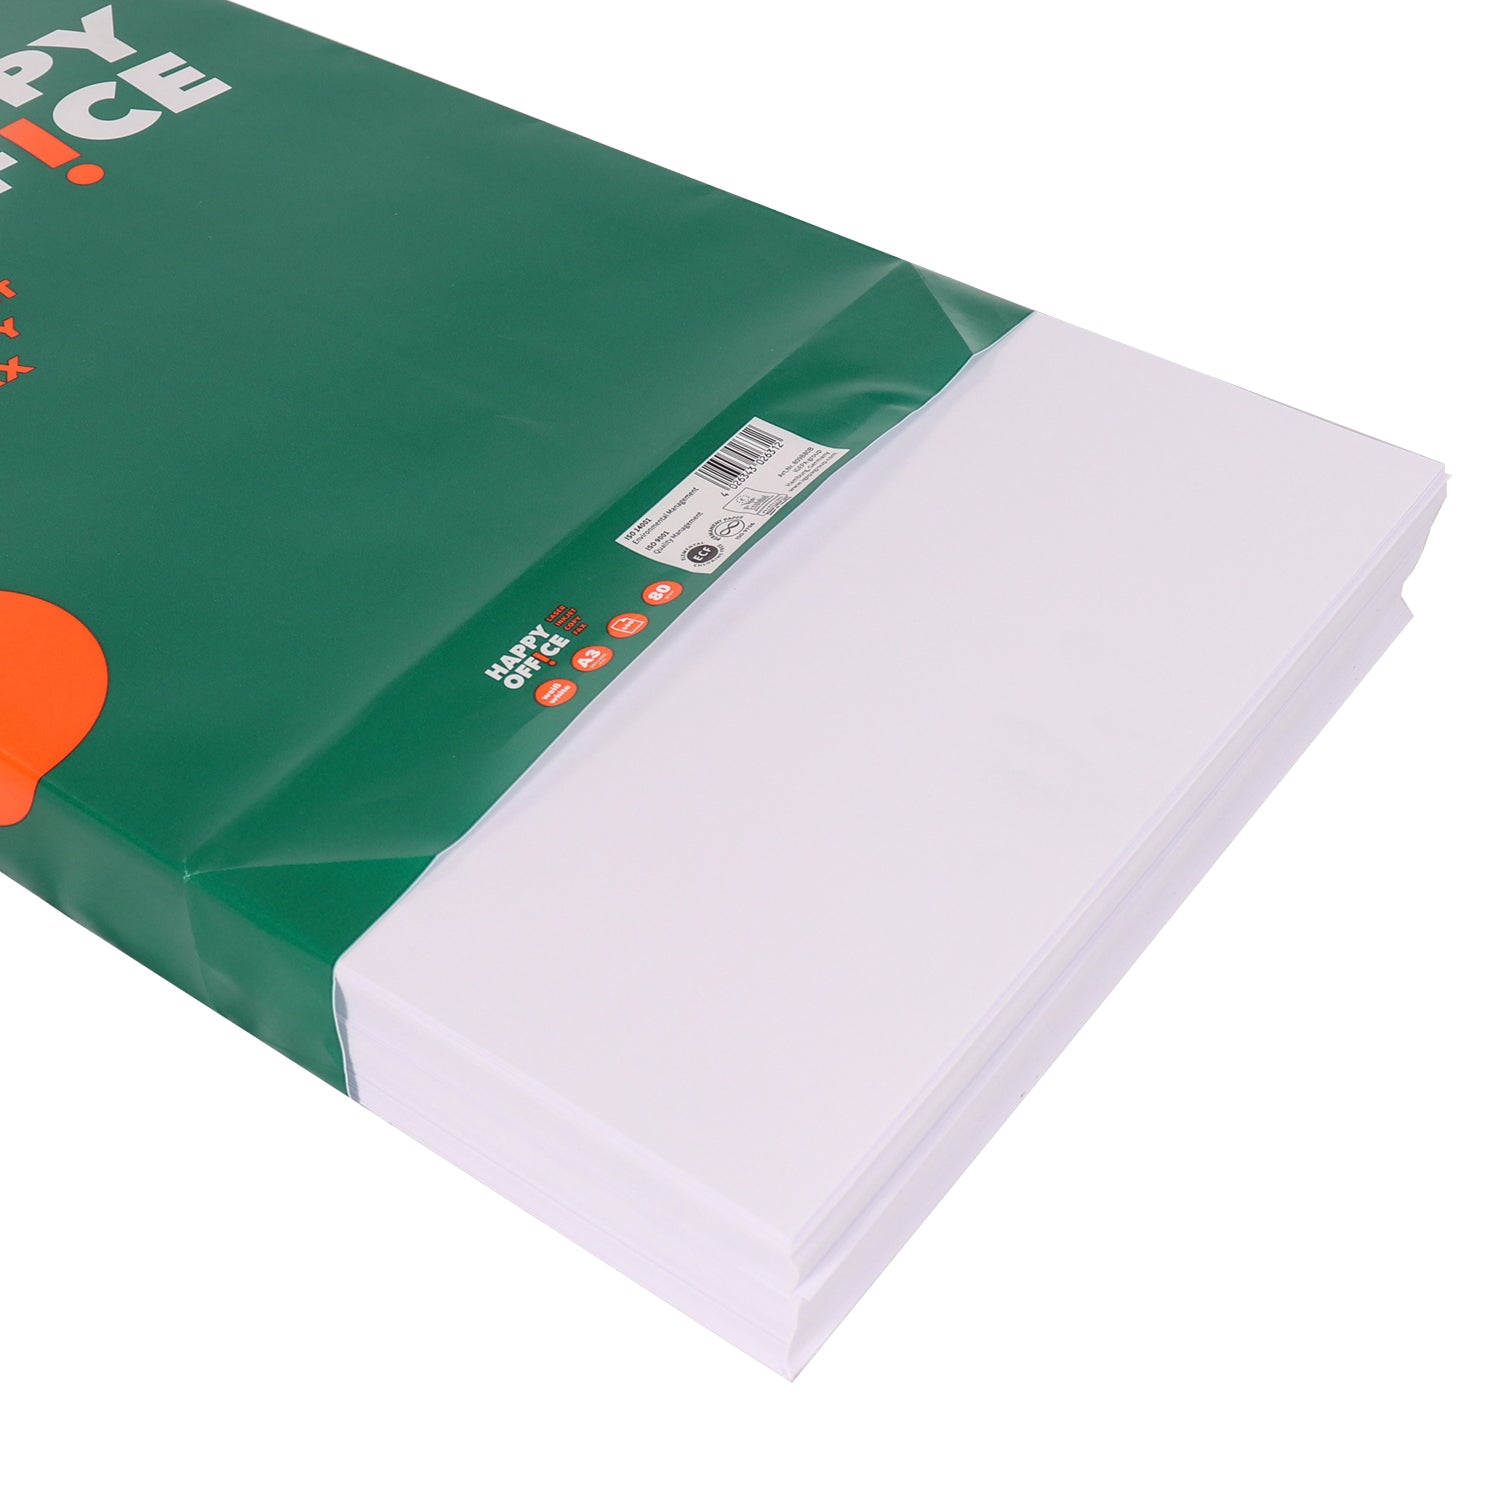 Belko® Kopierpapier Druckerpapier, DIN A3 weiß (Menge wählbar)